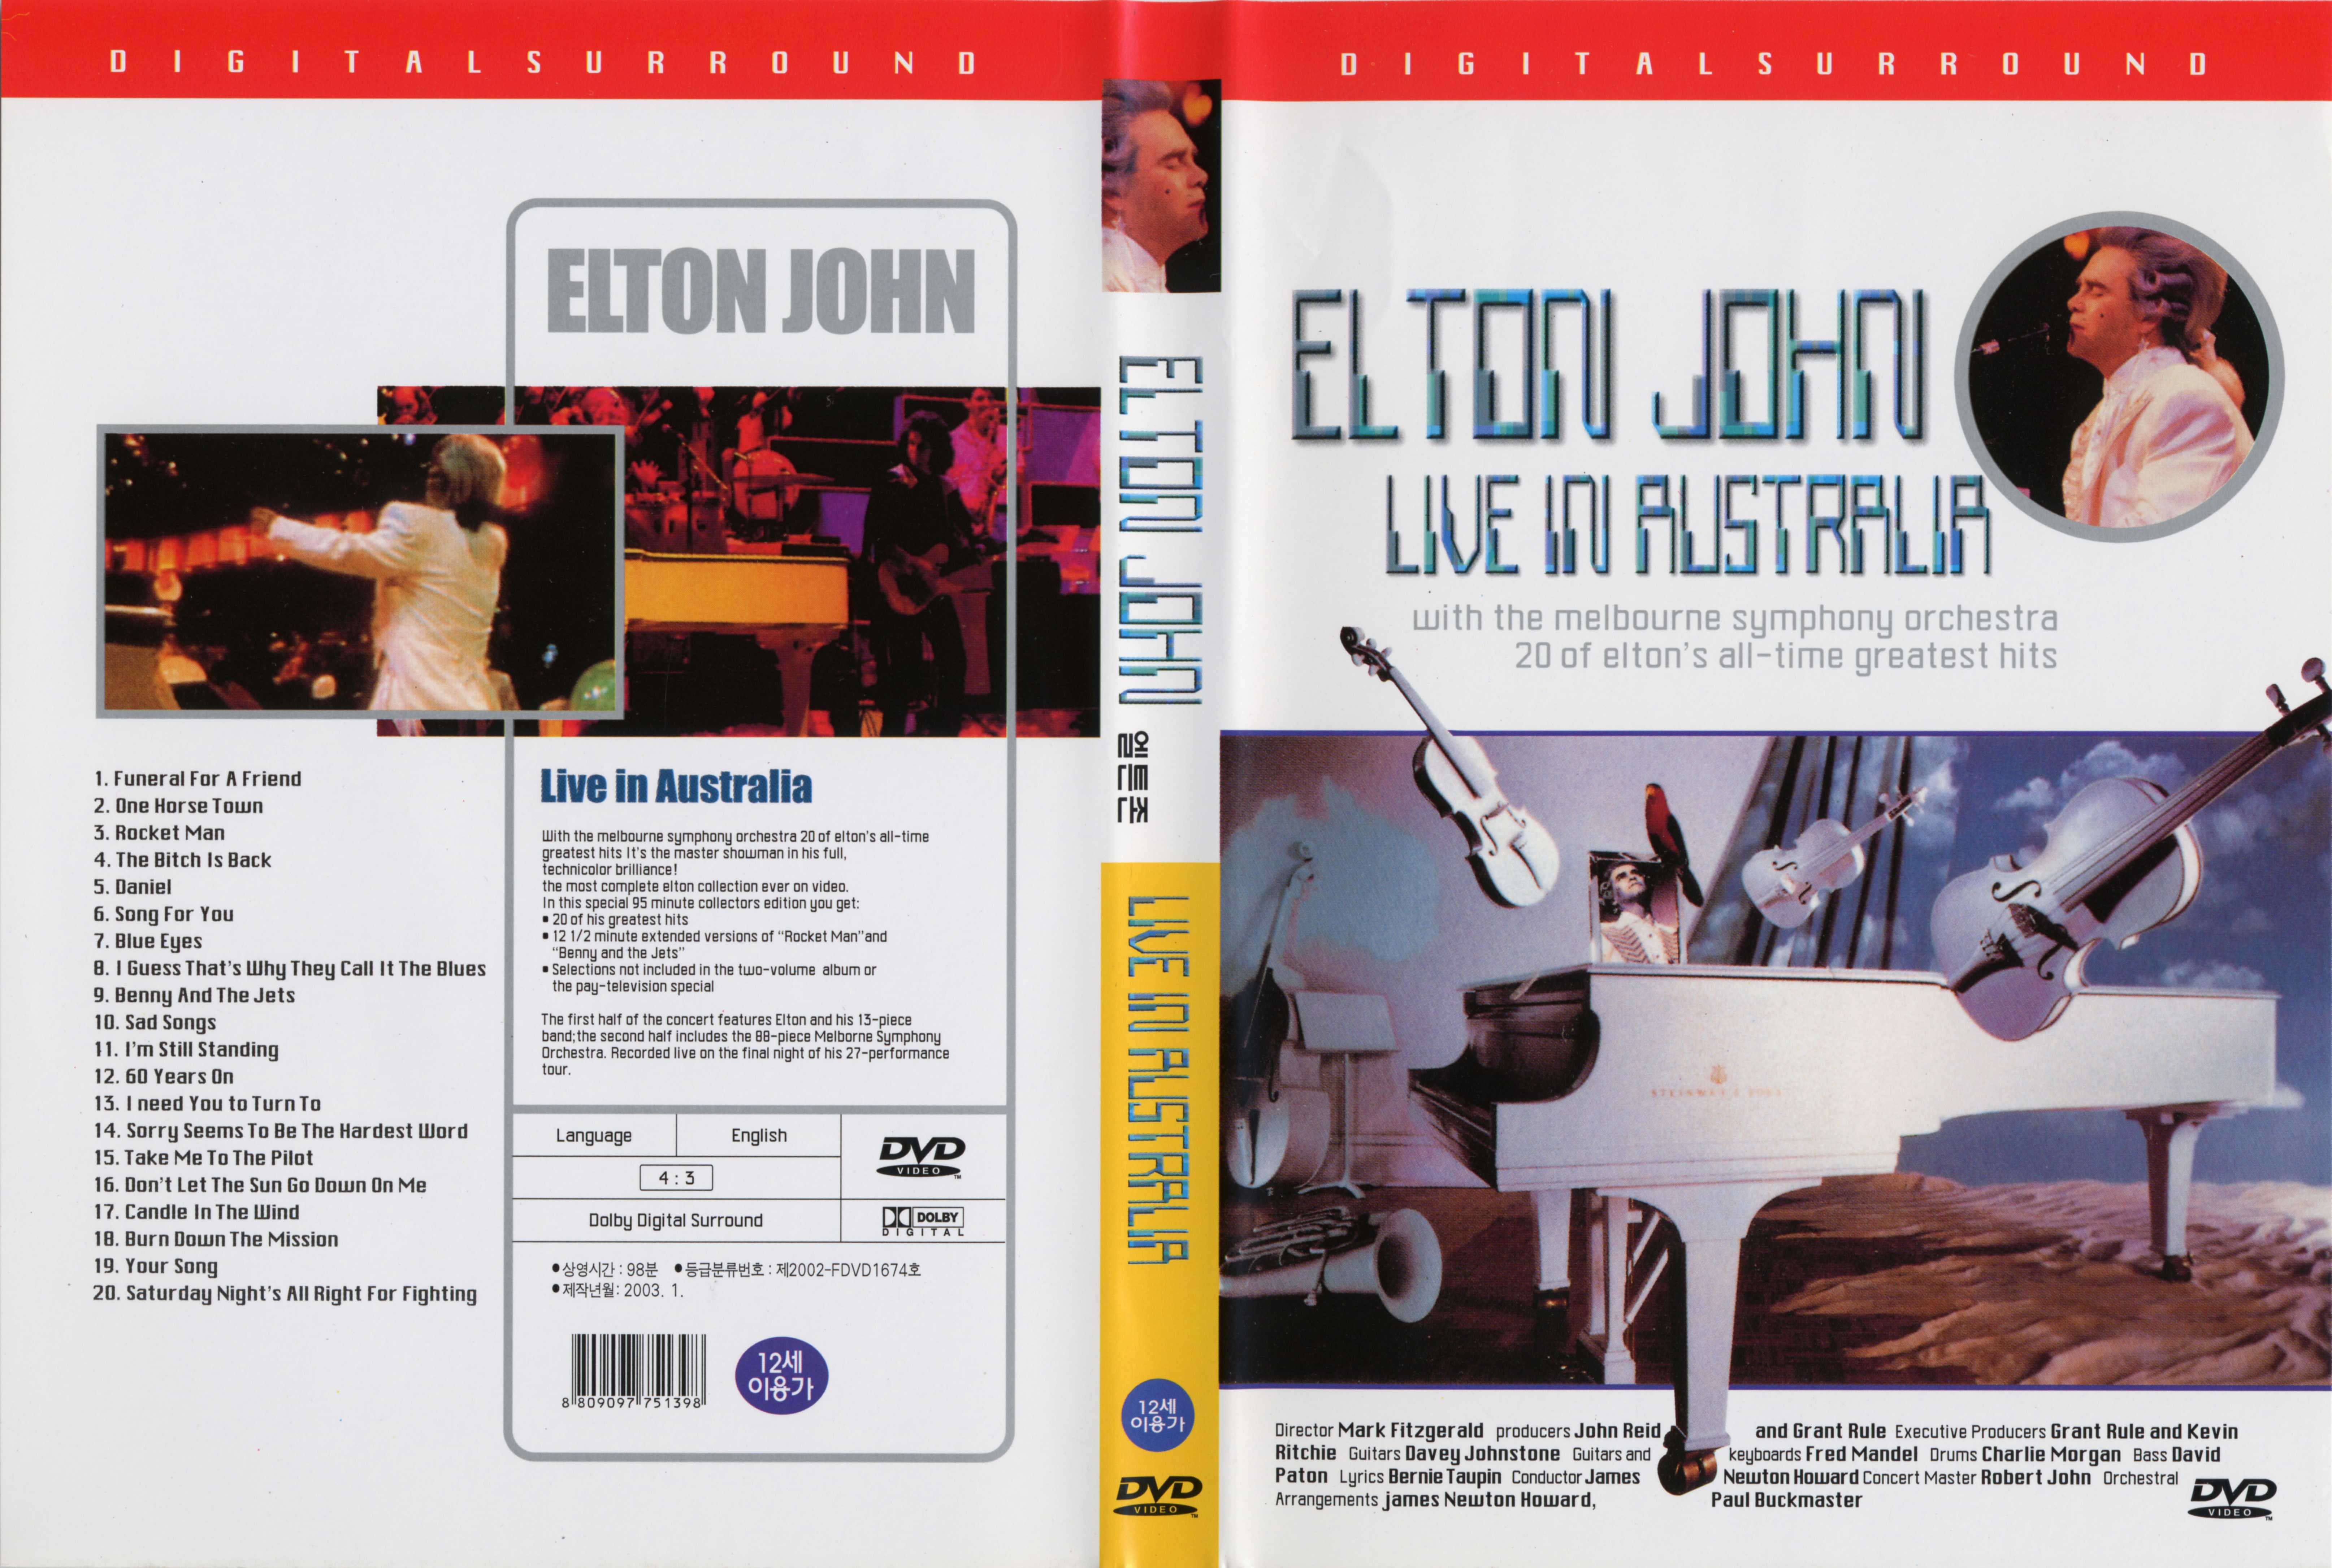 Jaquette DVD Elton John live in australia